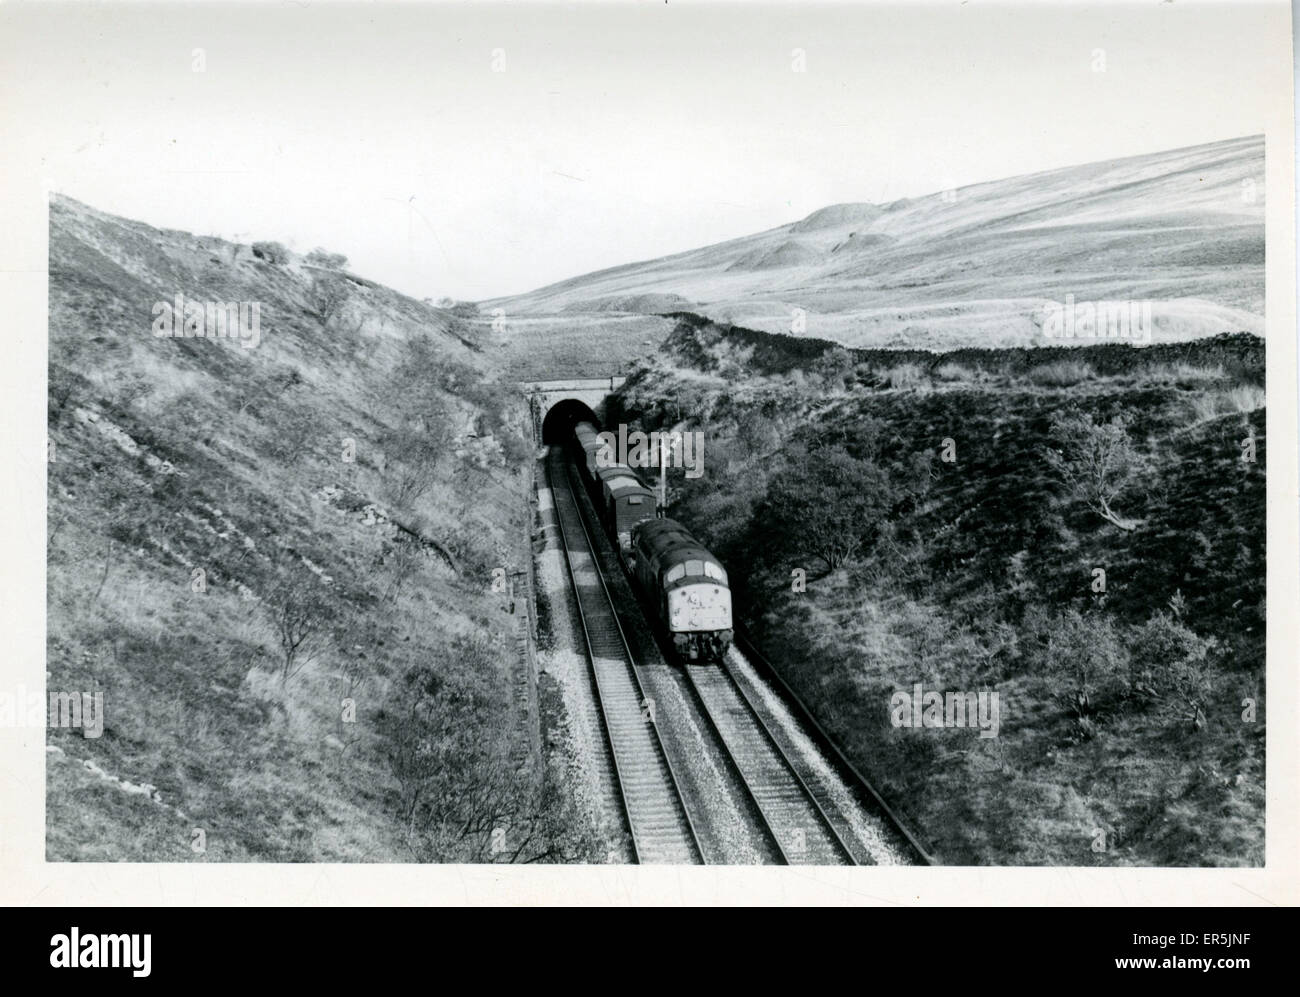 Settle-Carlisle Railway - Train emerging from Blea Moor Tunn Stock Photo